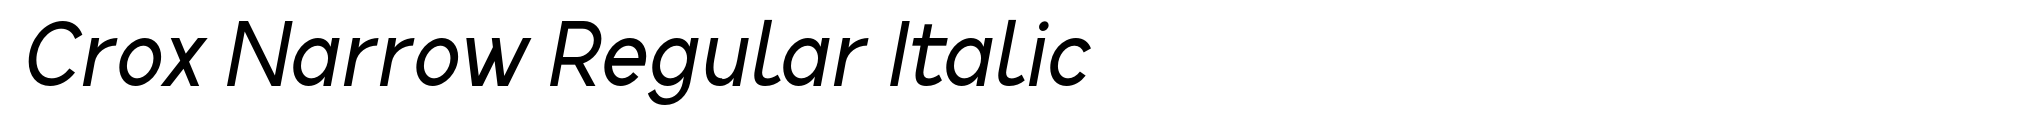 Crox Narrow Regular Italic image